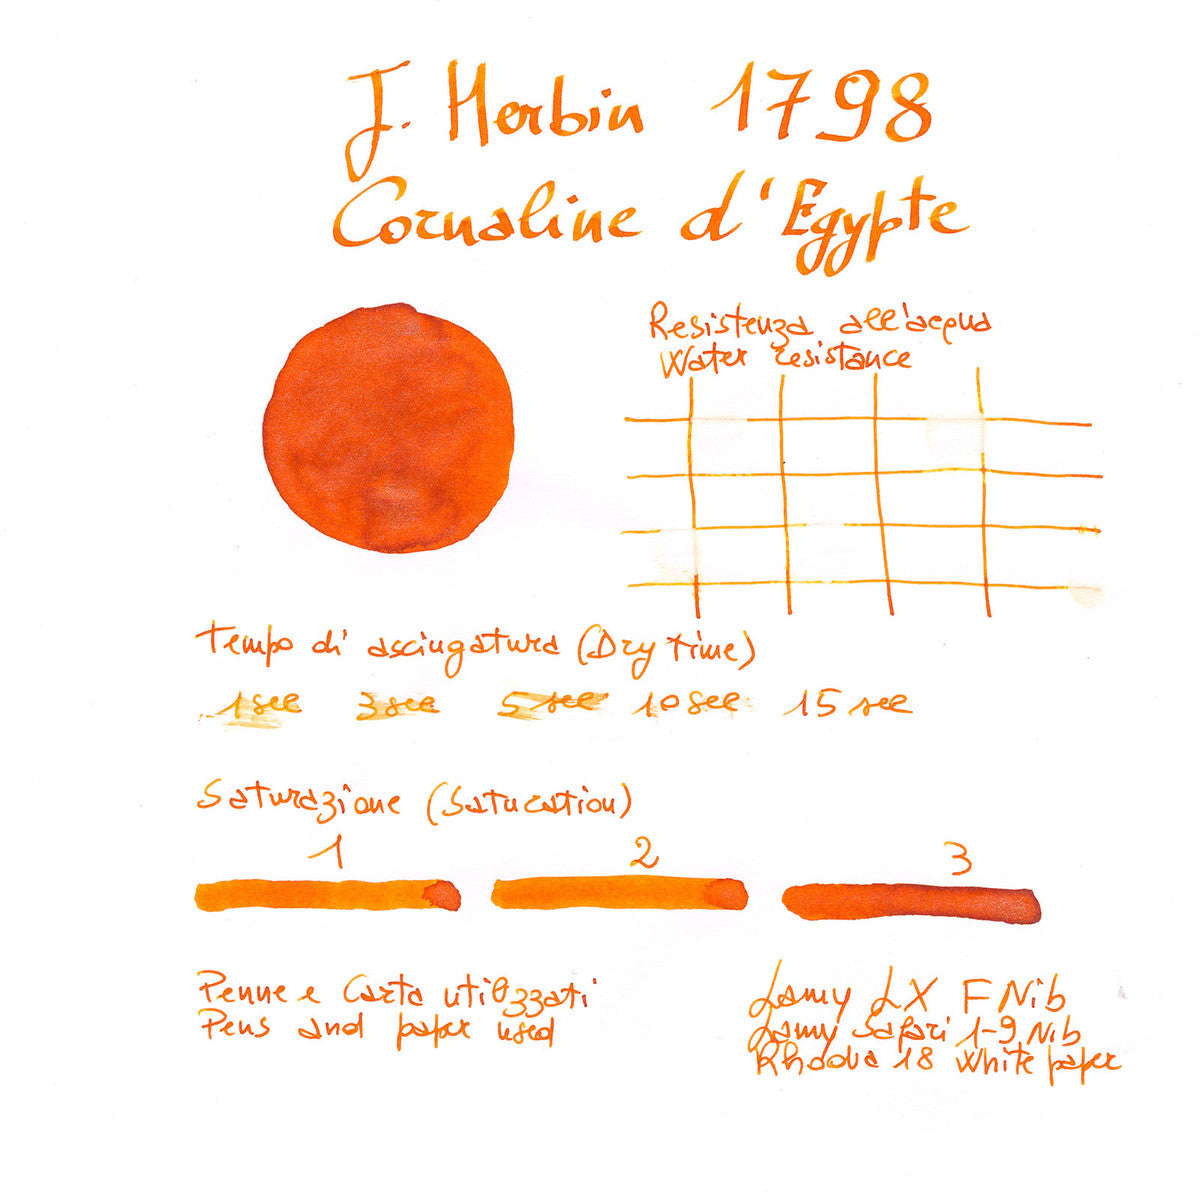 Jacques Herbin 1798 Cornaline d'Egypte - 50ml Bottled Ink